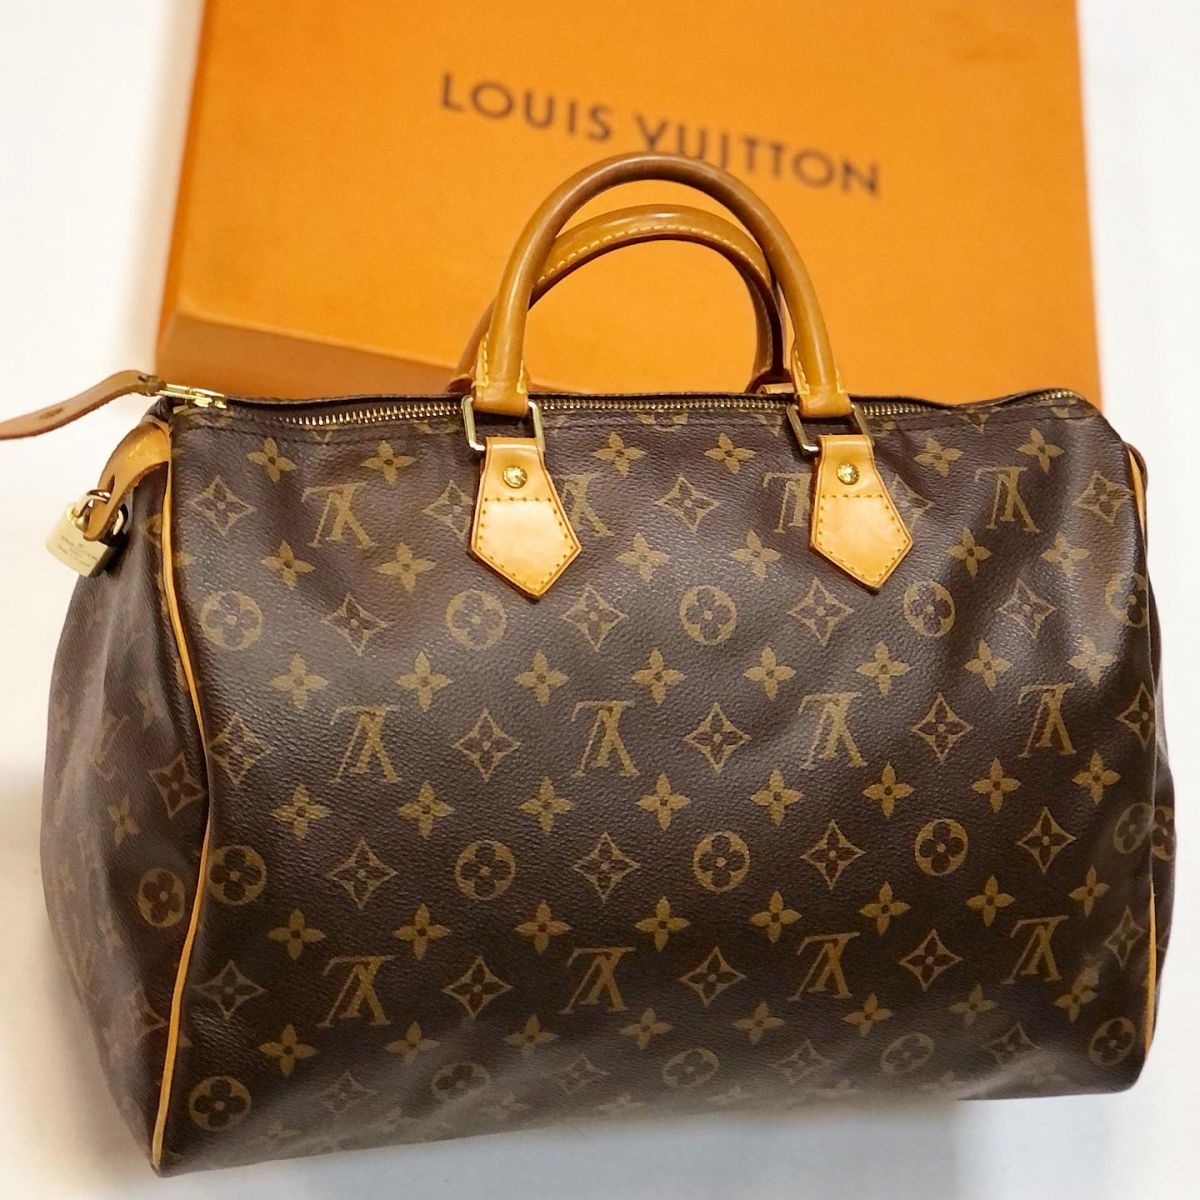 Сумка Louis Vuitton  размер 35/25 цена 23 078 руб 